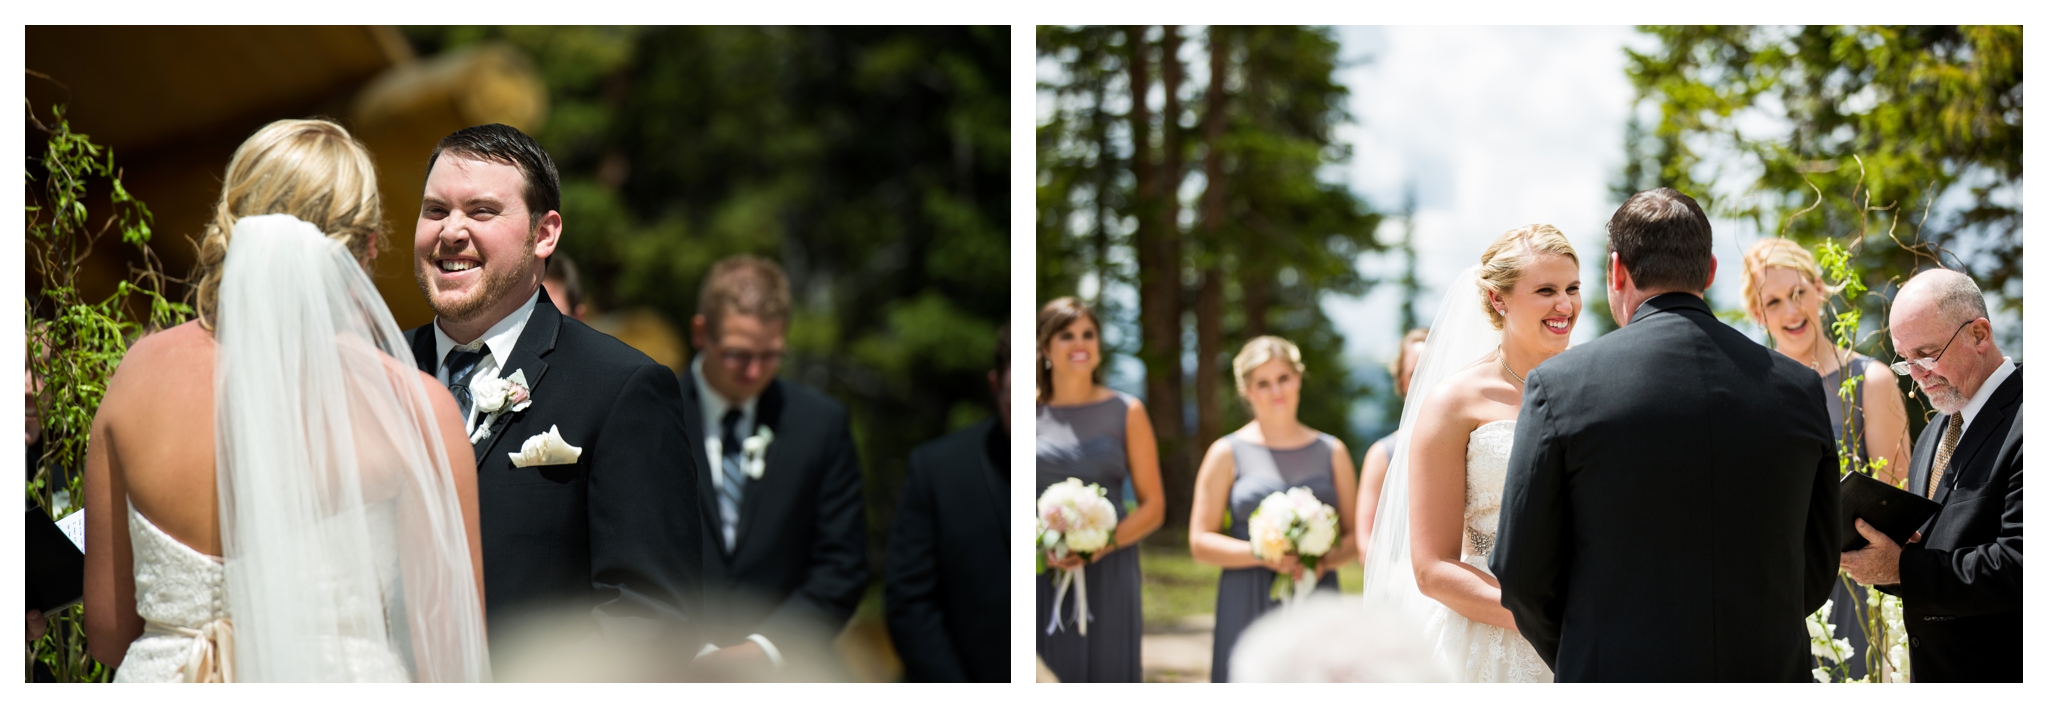 wedding vows at Copper Mountain Resort wedding